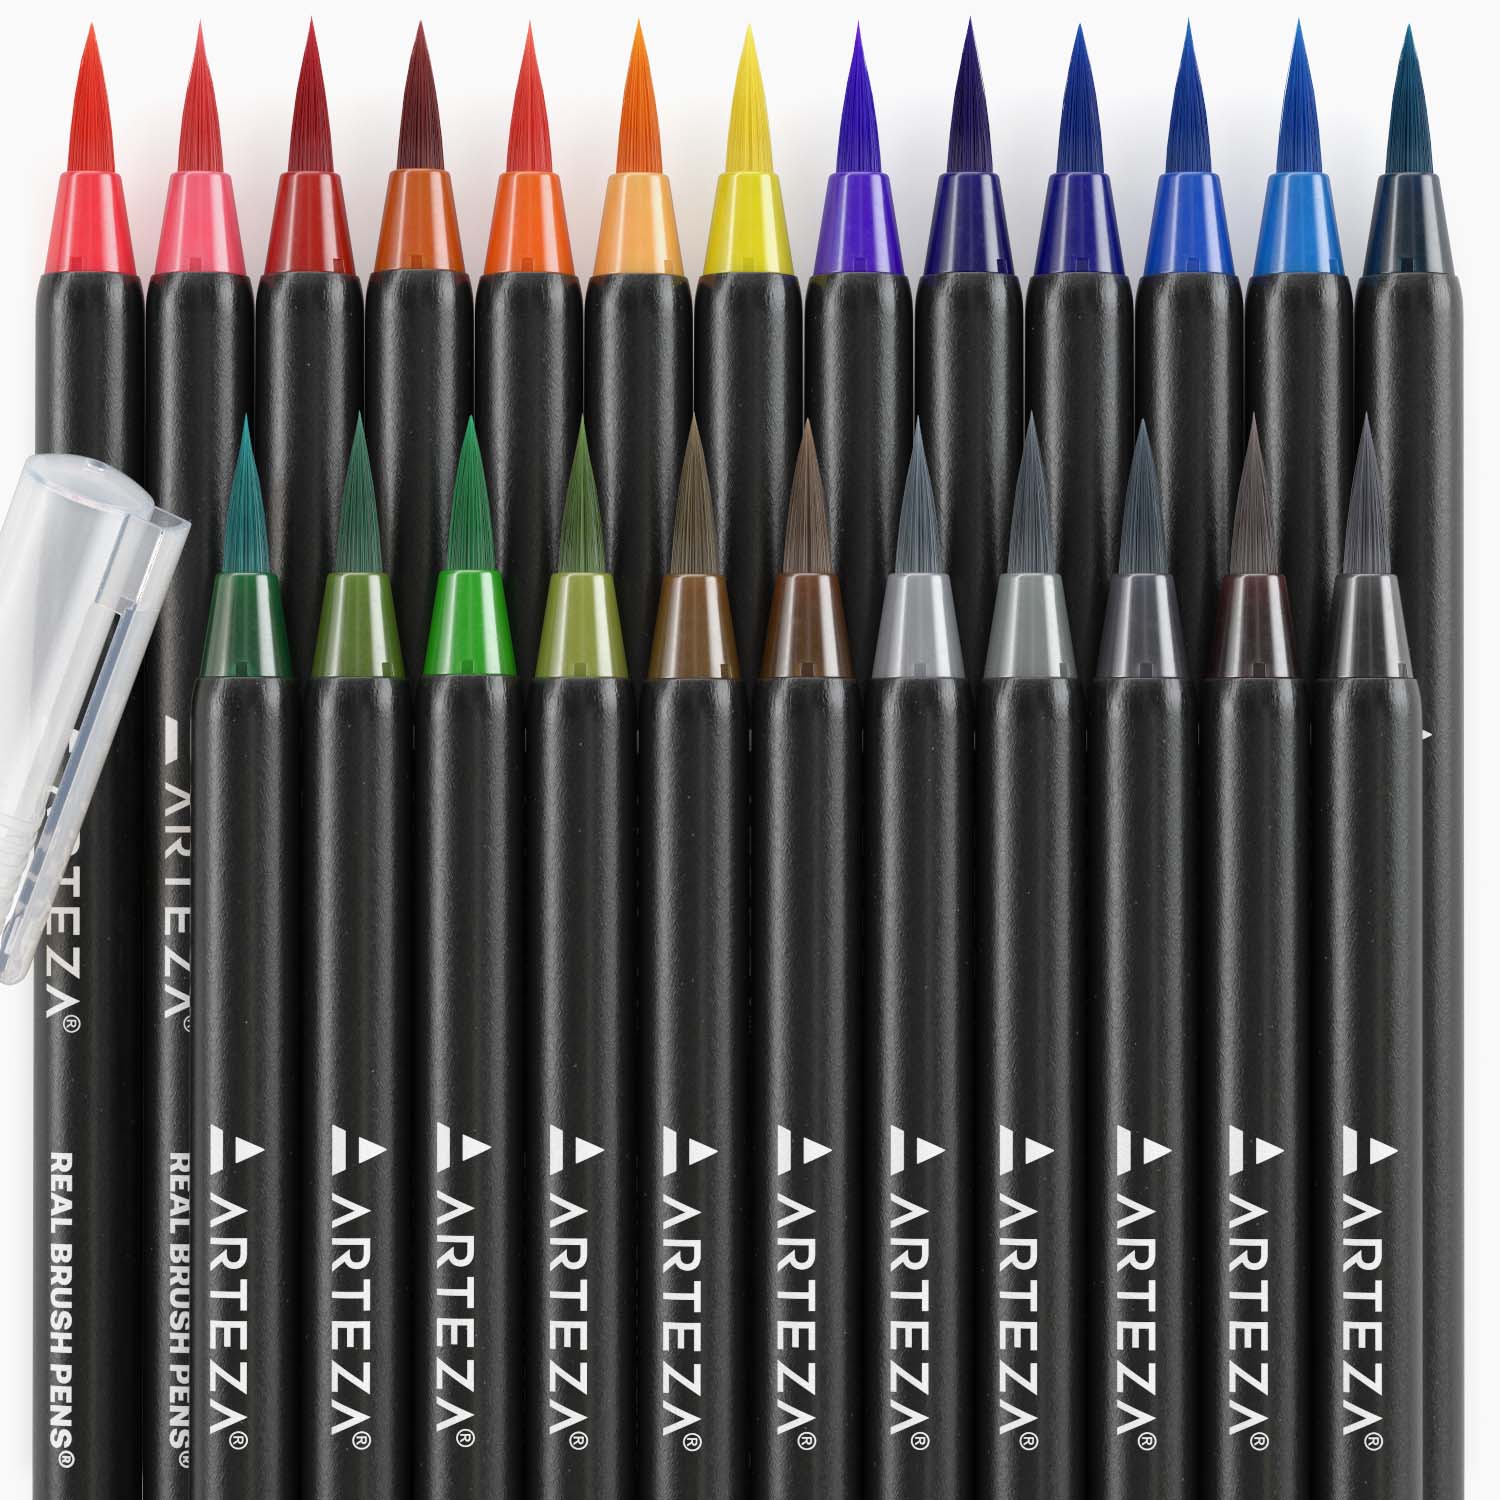 Arteza Brush Pens Review 